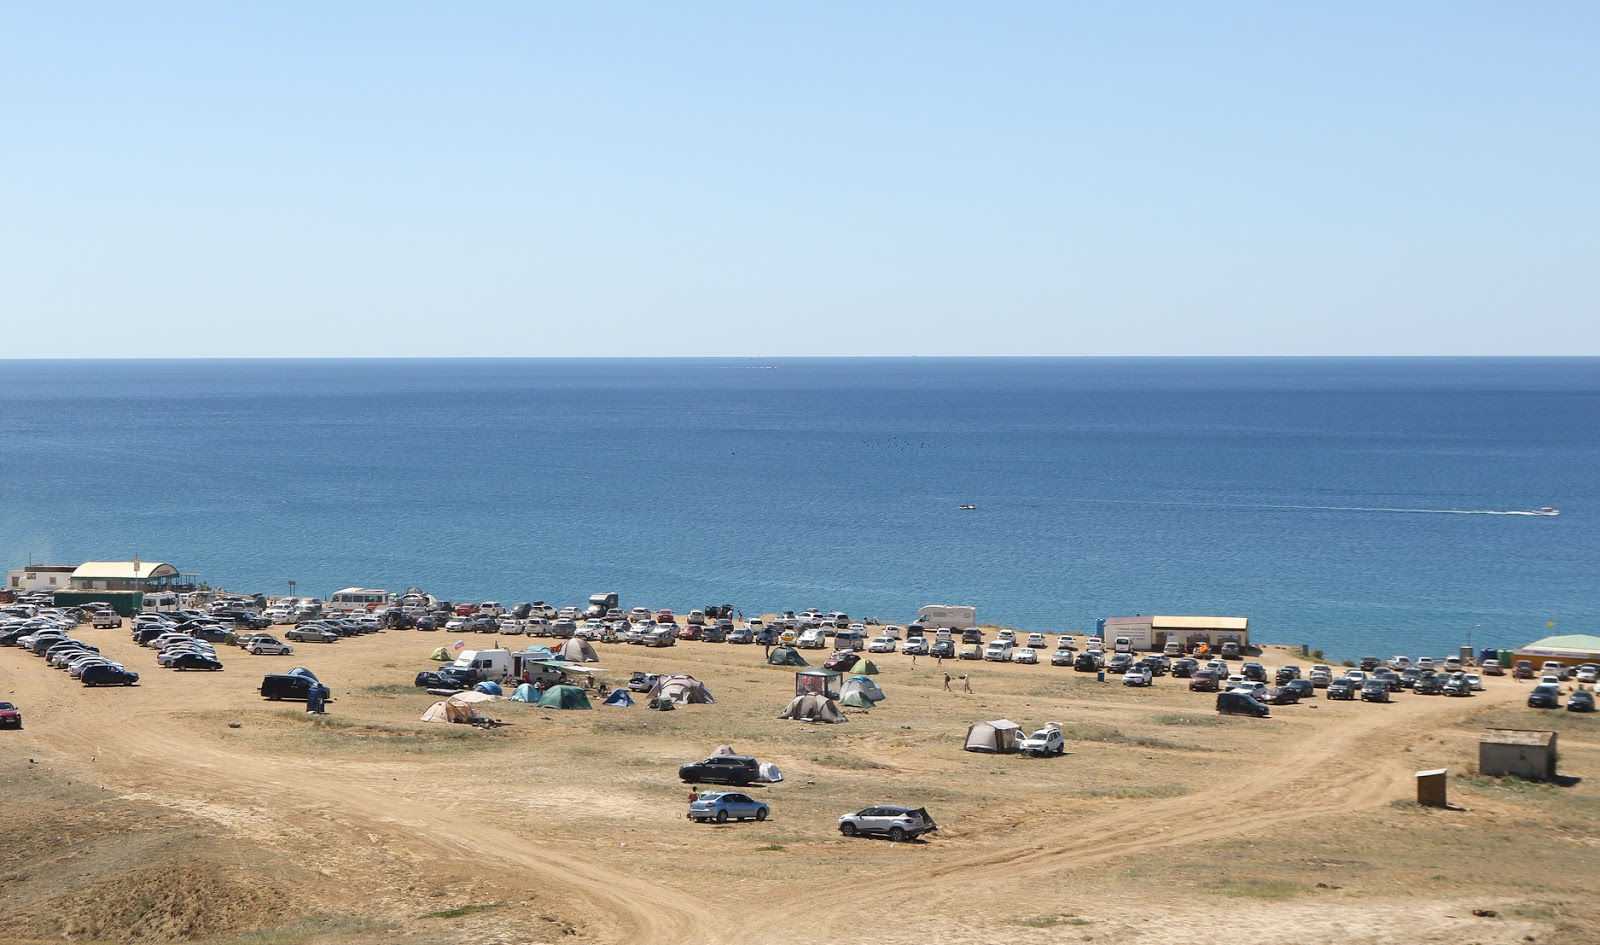 Fotografija Kassiopeya Plazh z prostorna obala